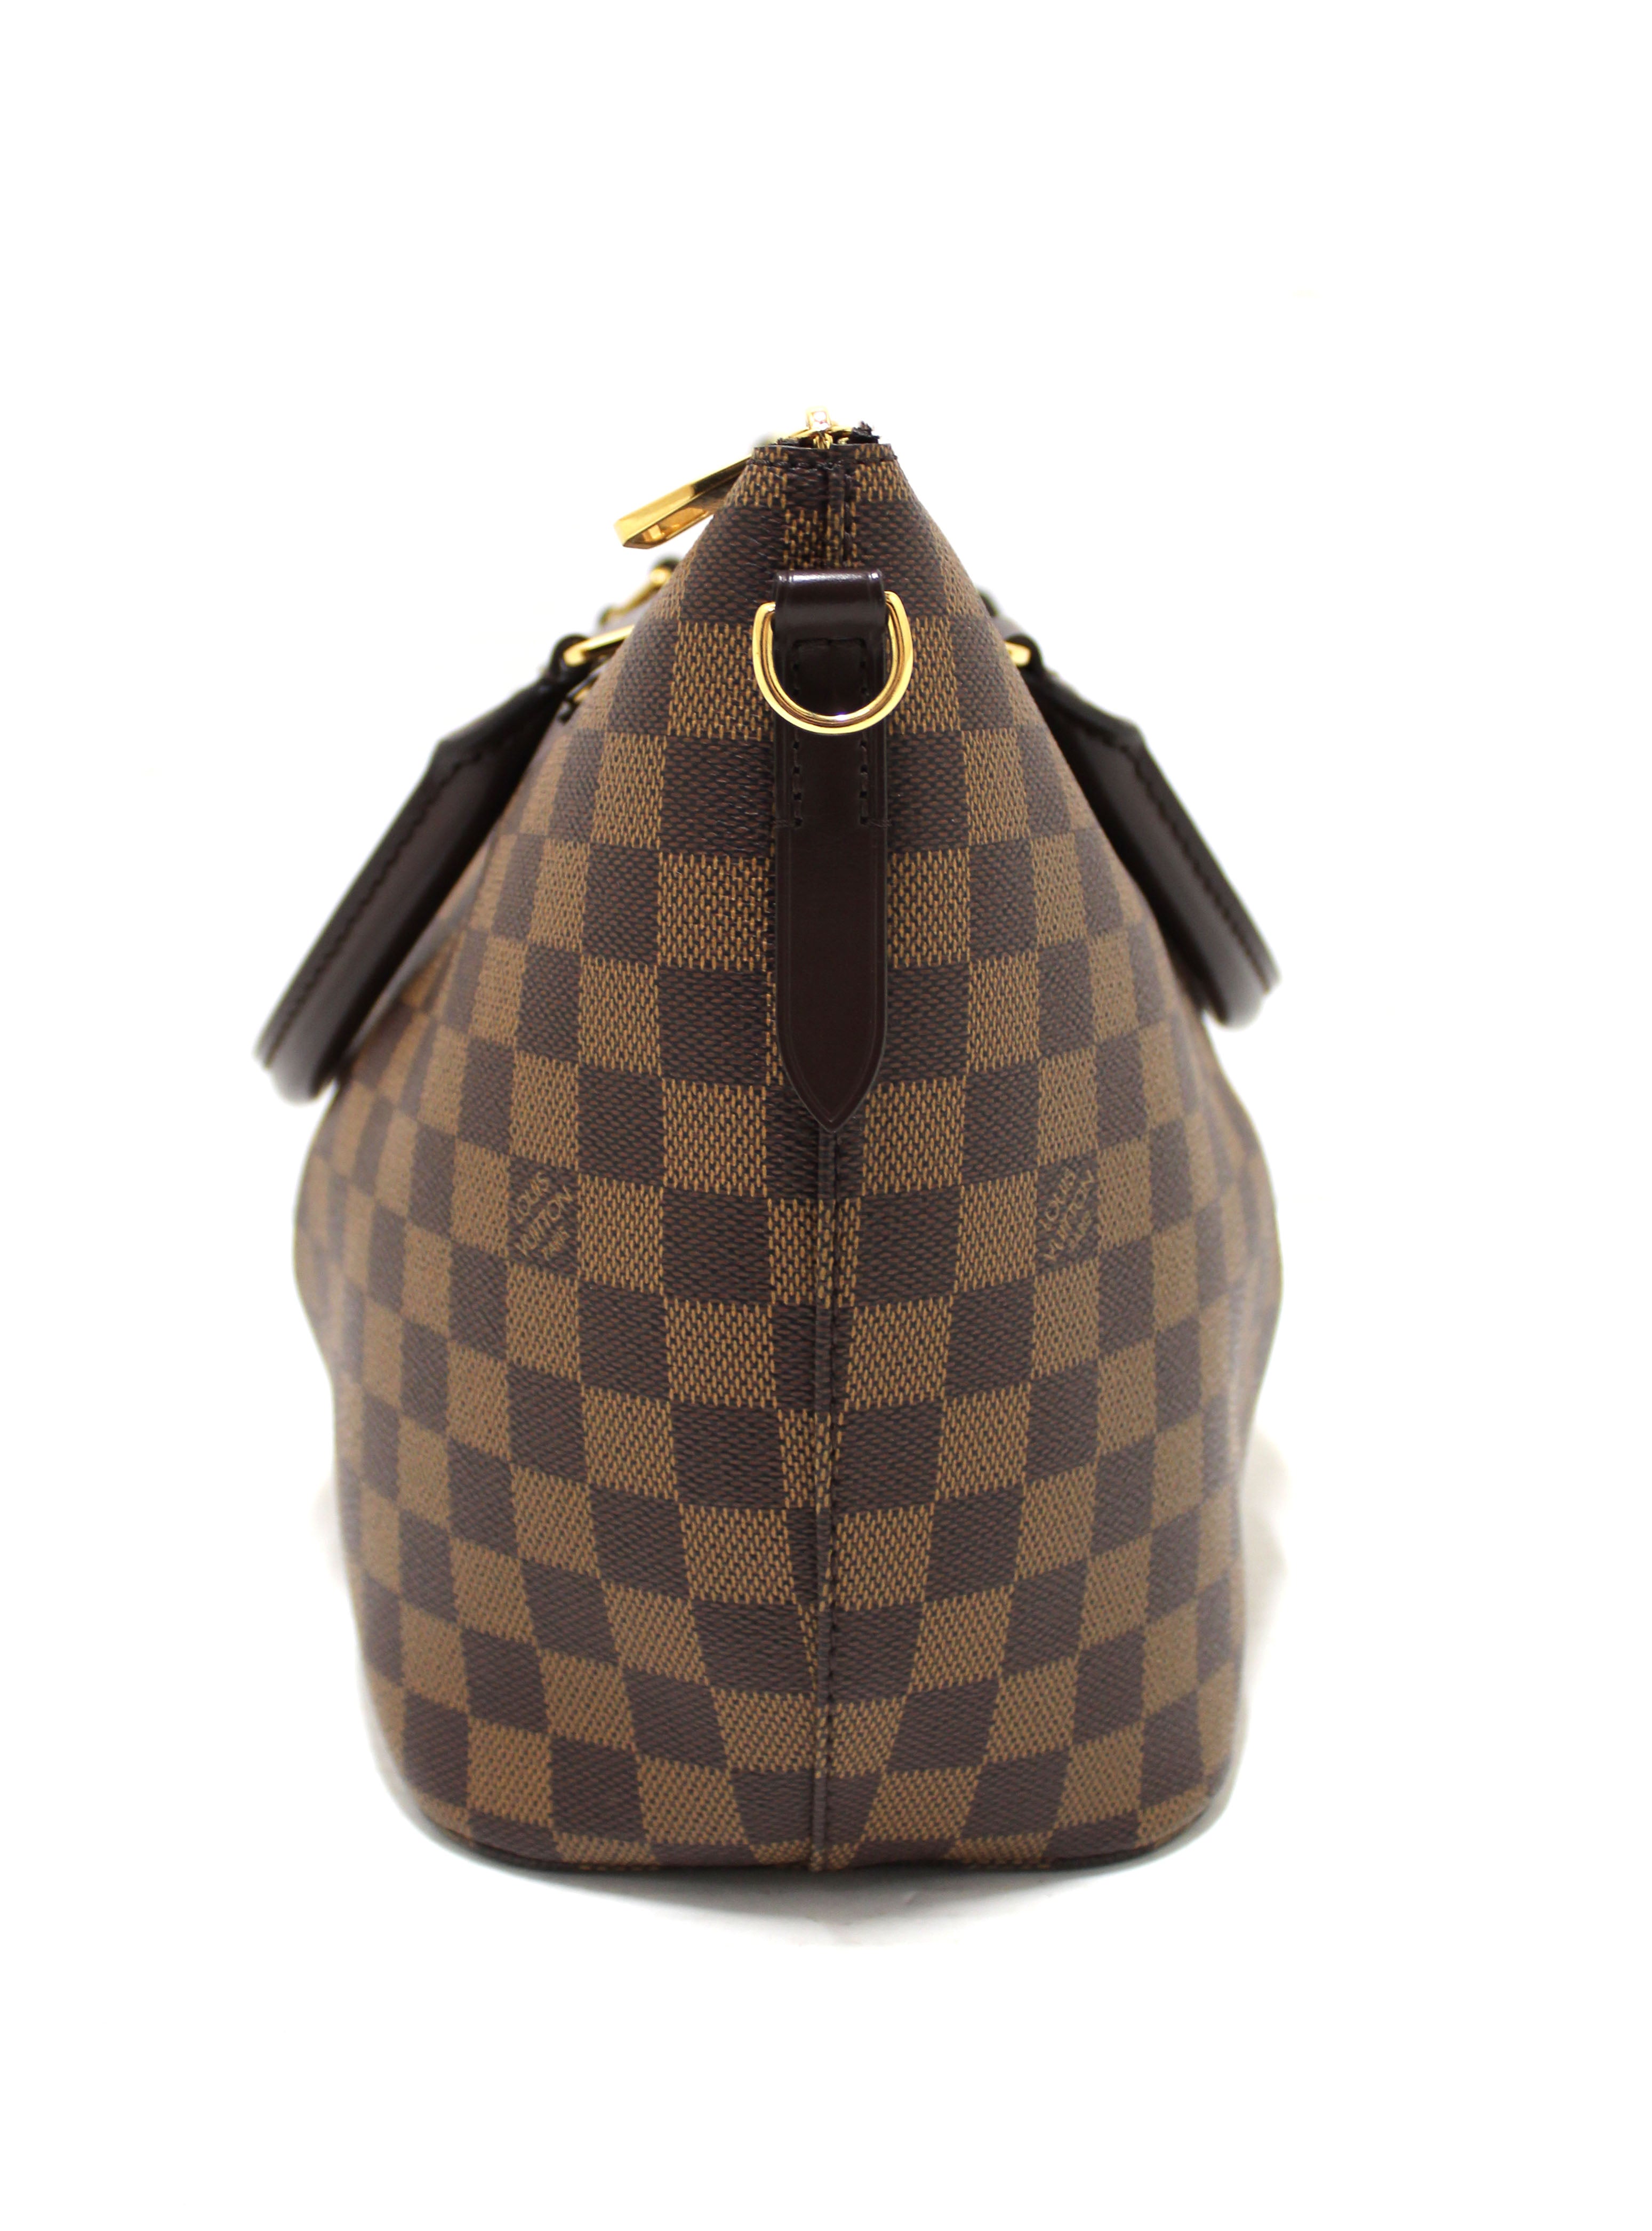 Louis Vuitton Siena MM Damier Ebene Shoulder/Hand Bag Pre-Loved Authentic